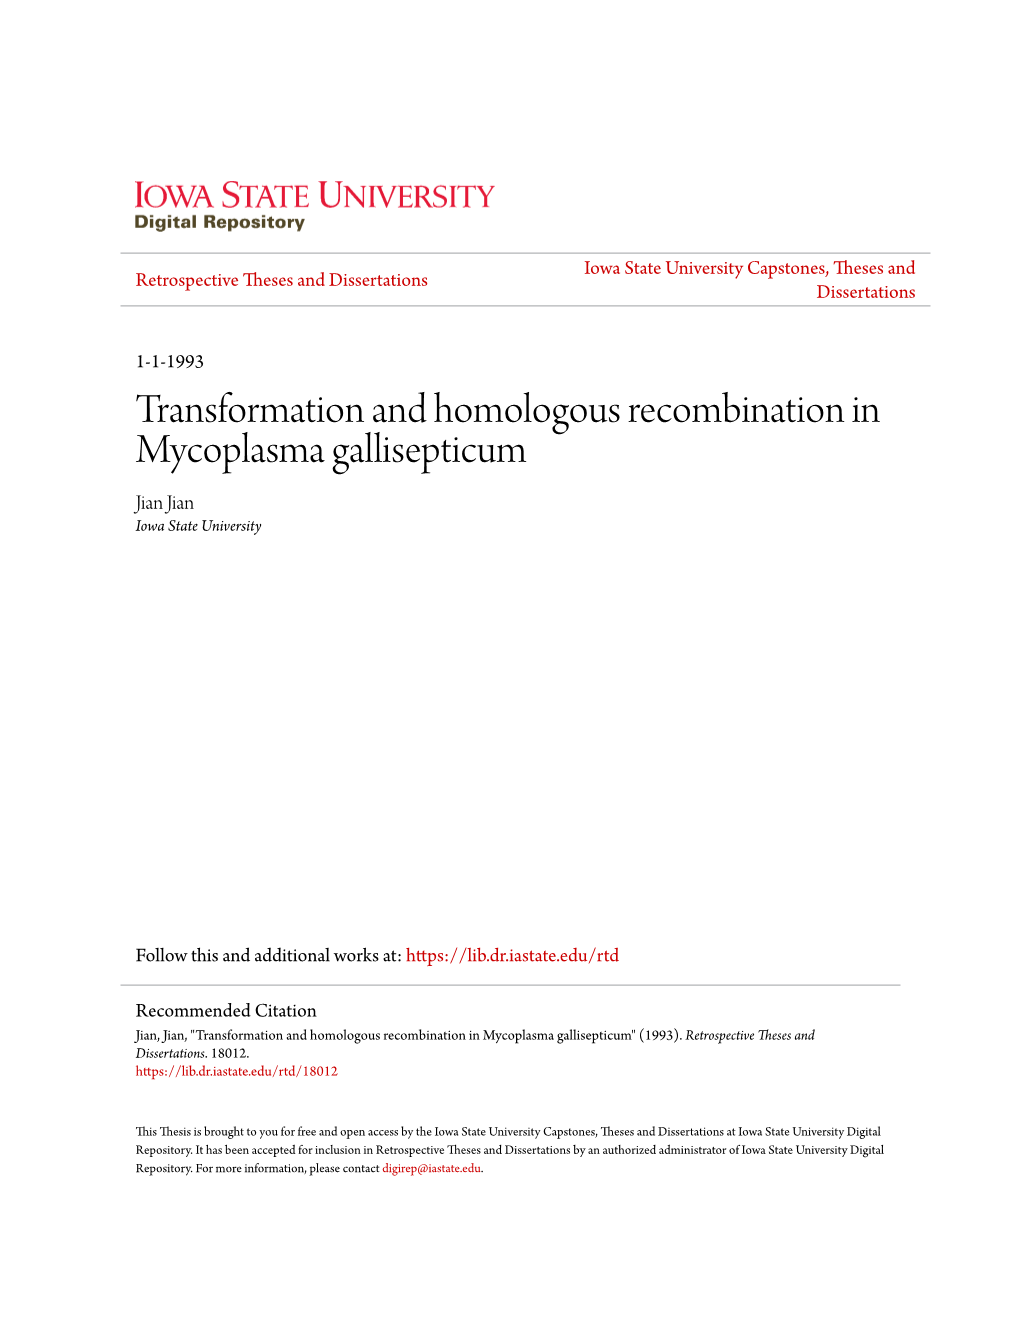 Transformation and Homologous Recombination in Mycoplasma Gallisepticum Jian Jian Iowa State University